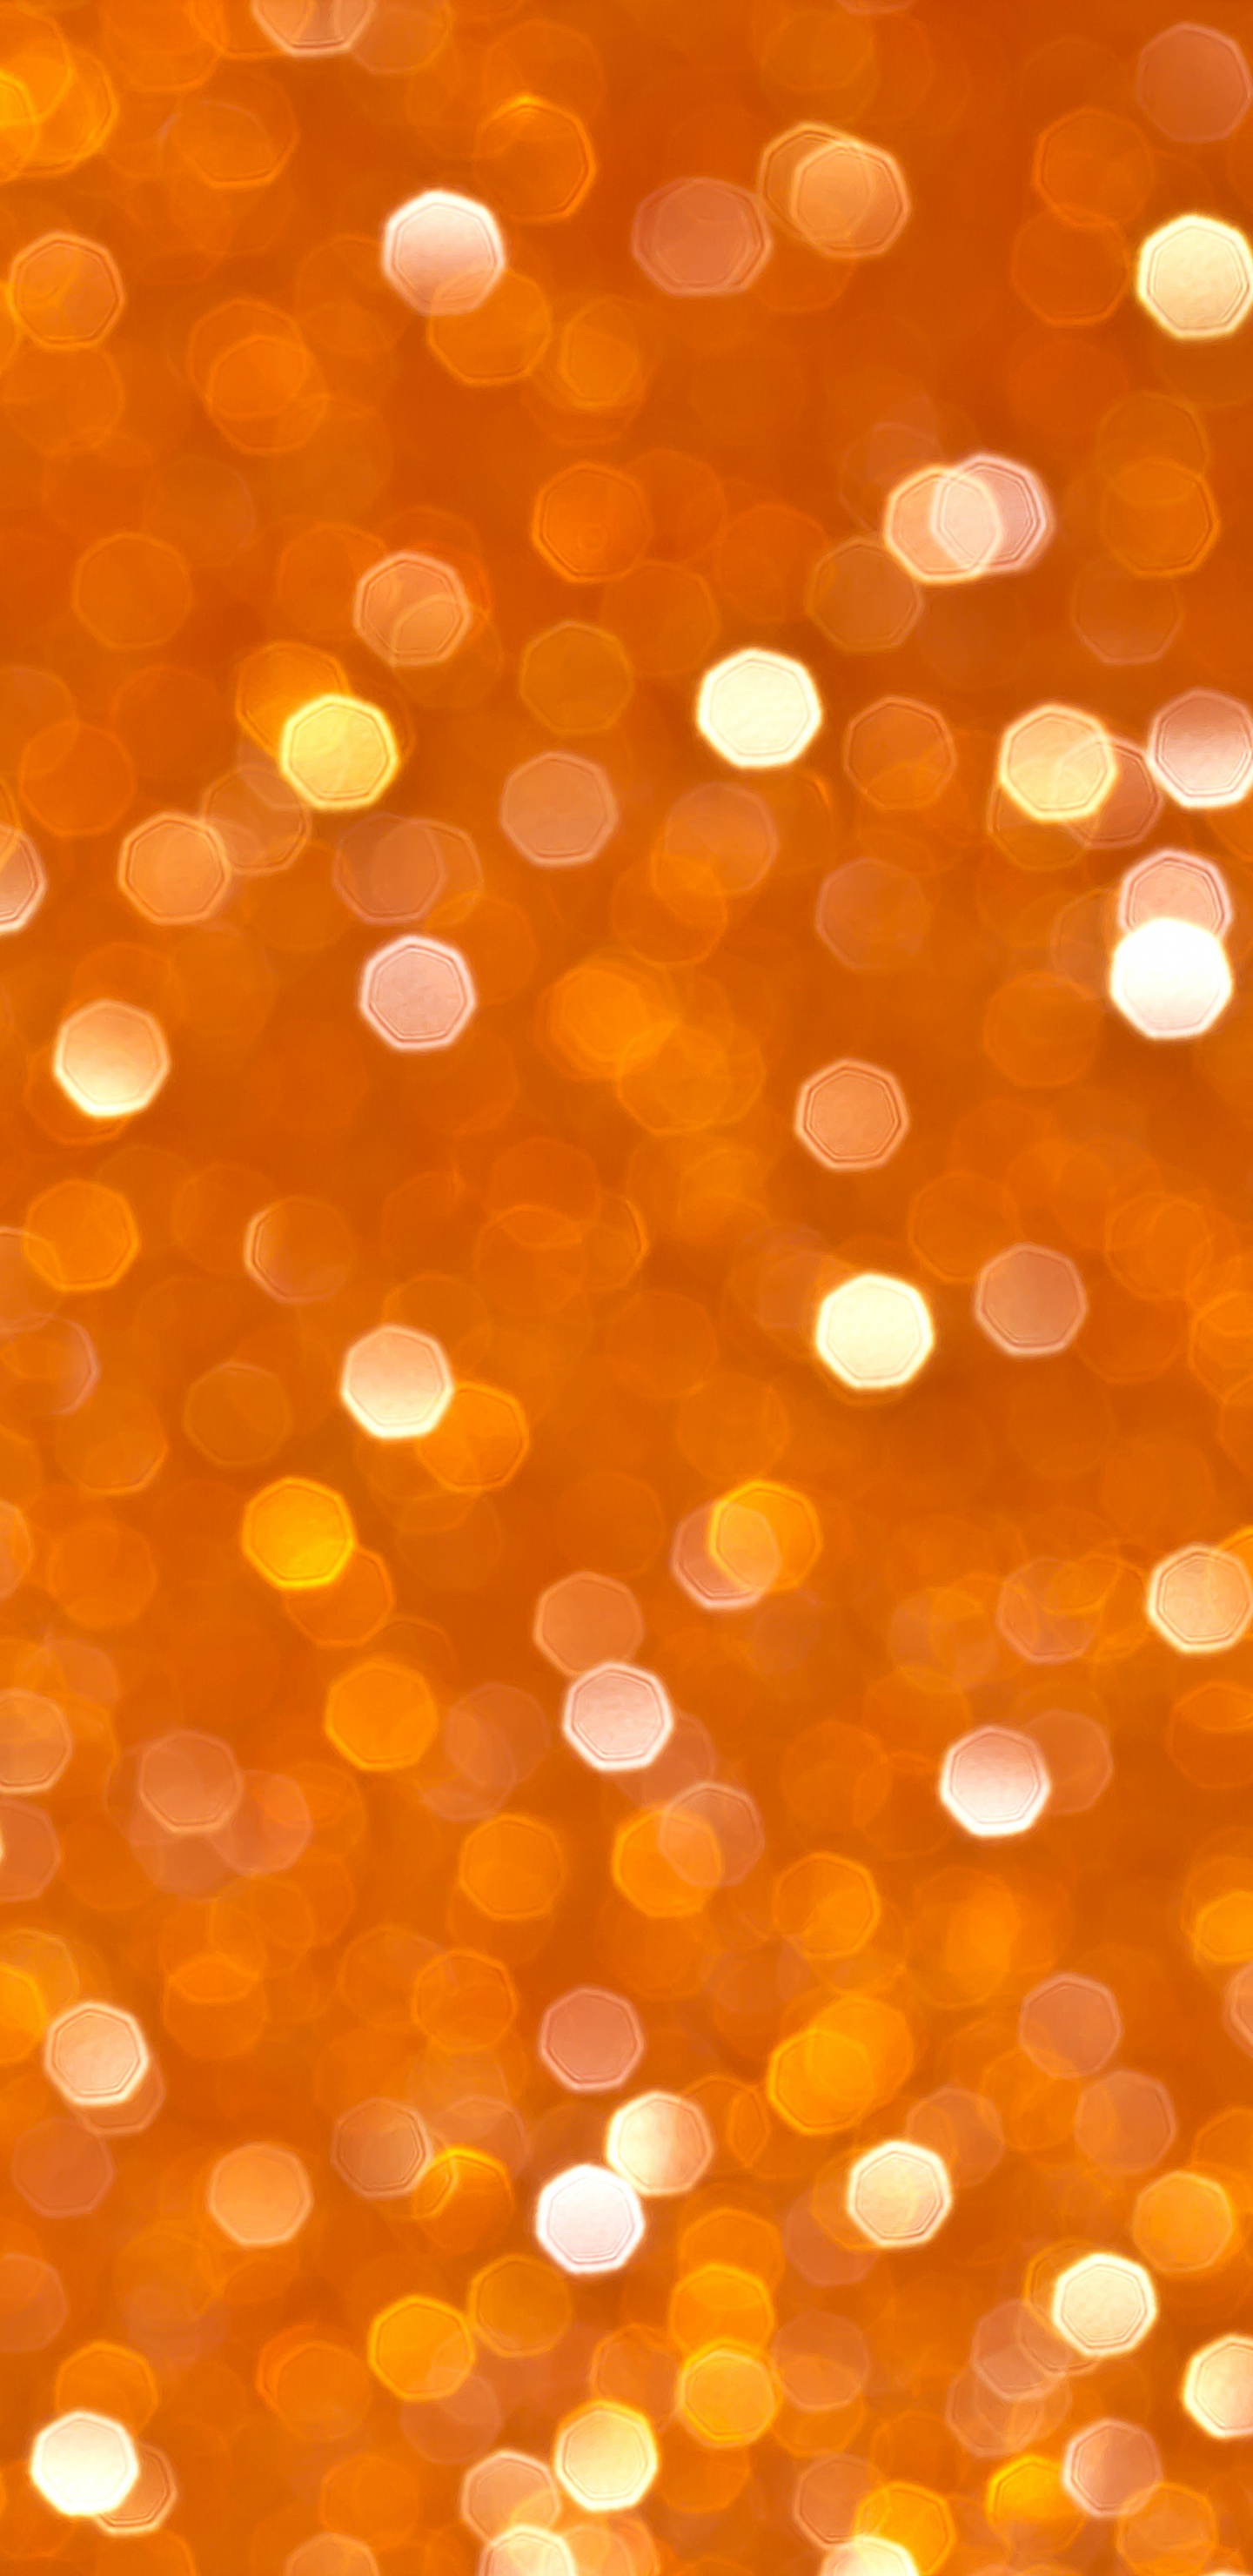 Orange and White Bokeh Lights. Wallpaper in 1440x2960 Resolution